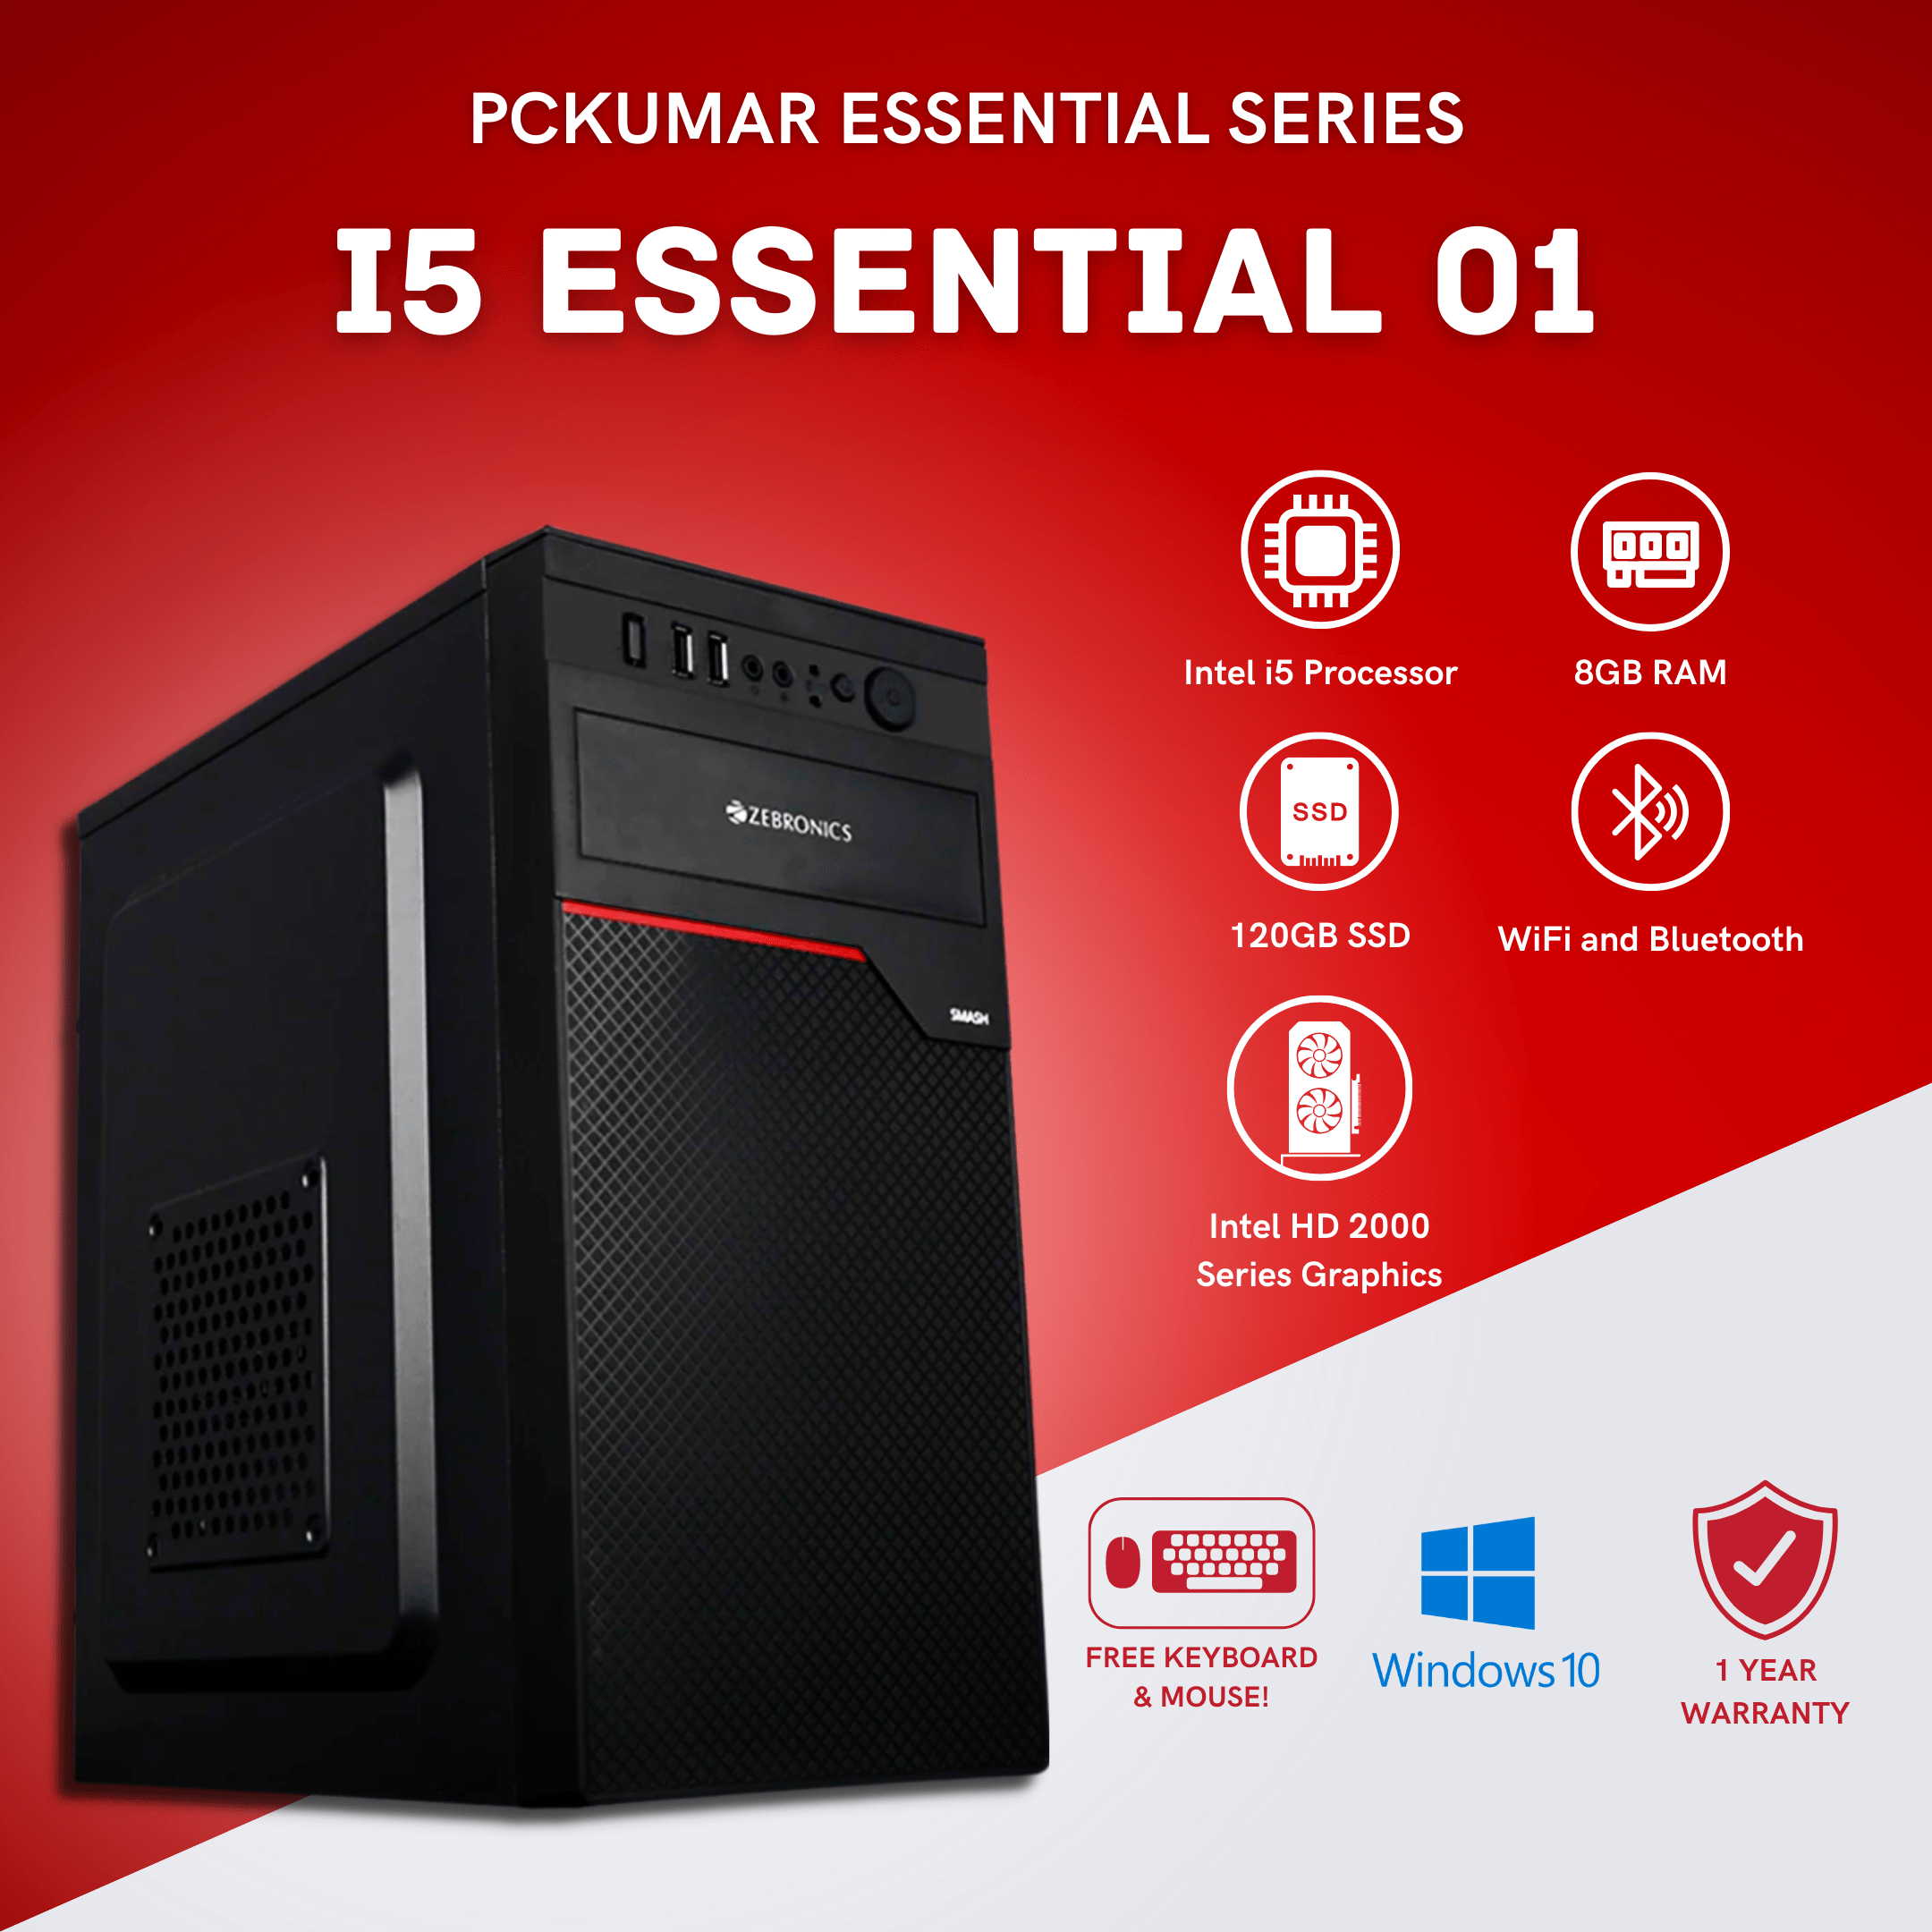 PC Kumar Essential 01 Intel i5 Basic PC for 11999/-